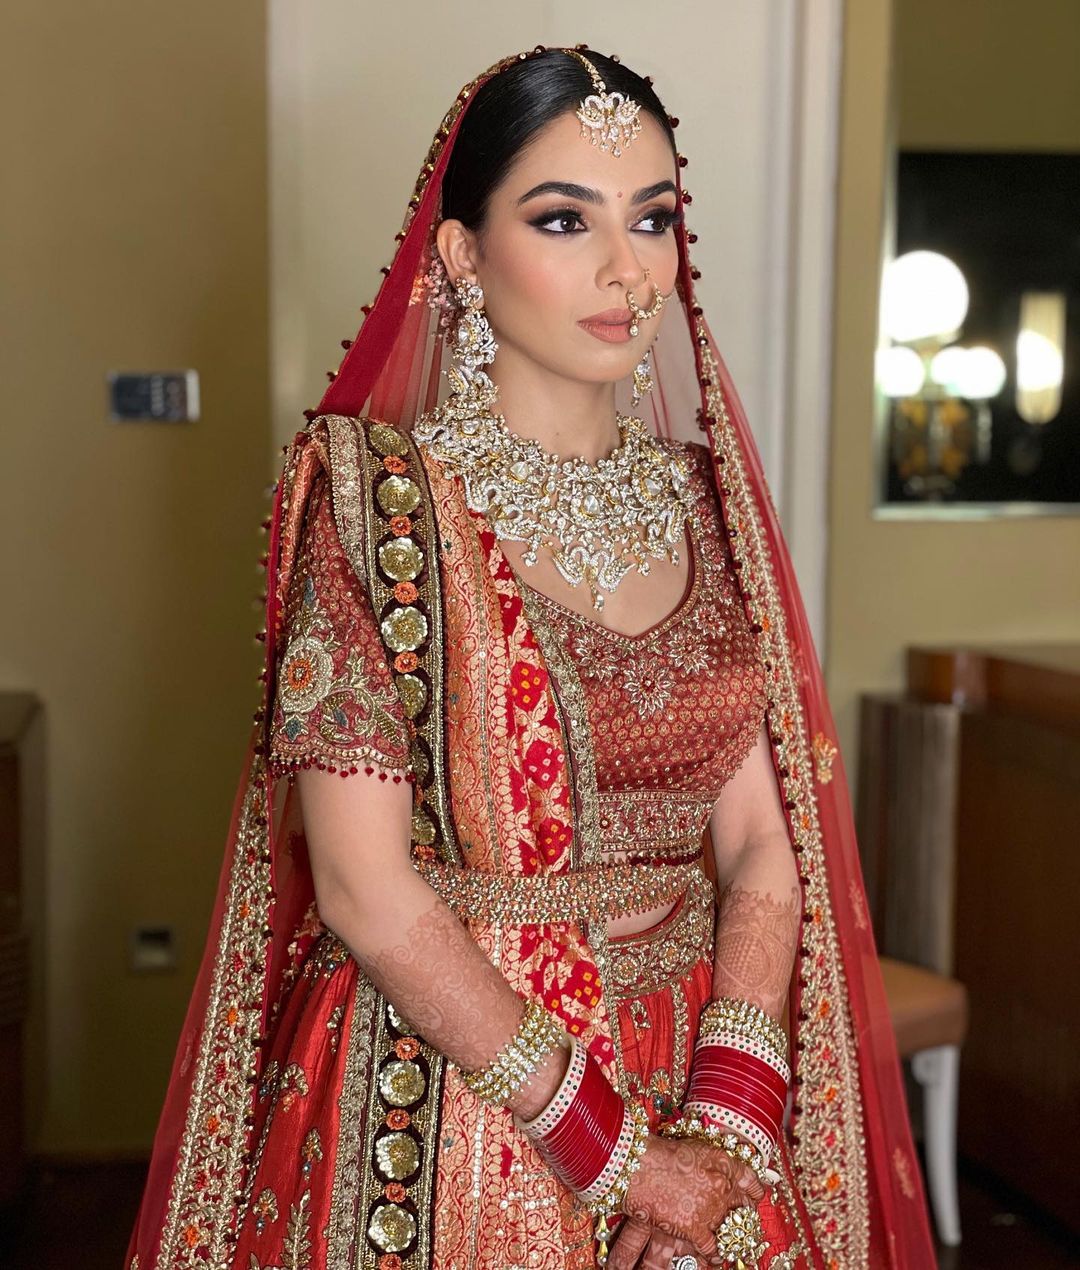 Best Indian Wedding Dresses - Royal Bindi